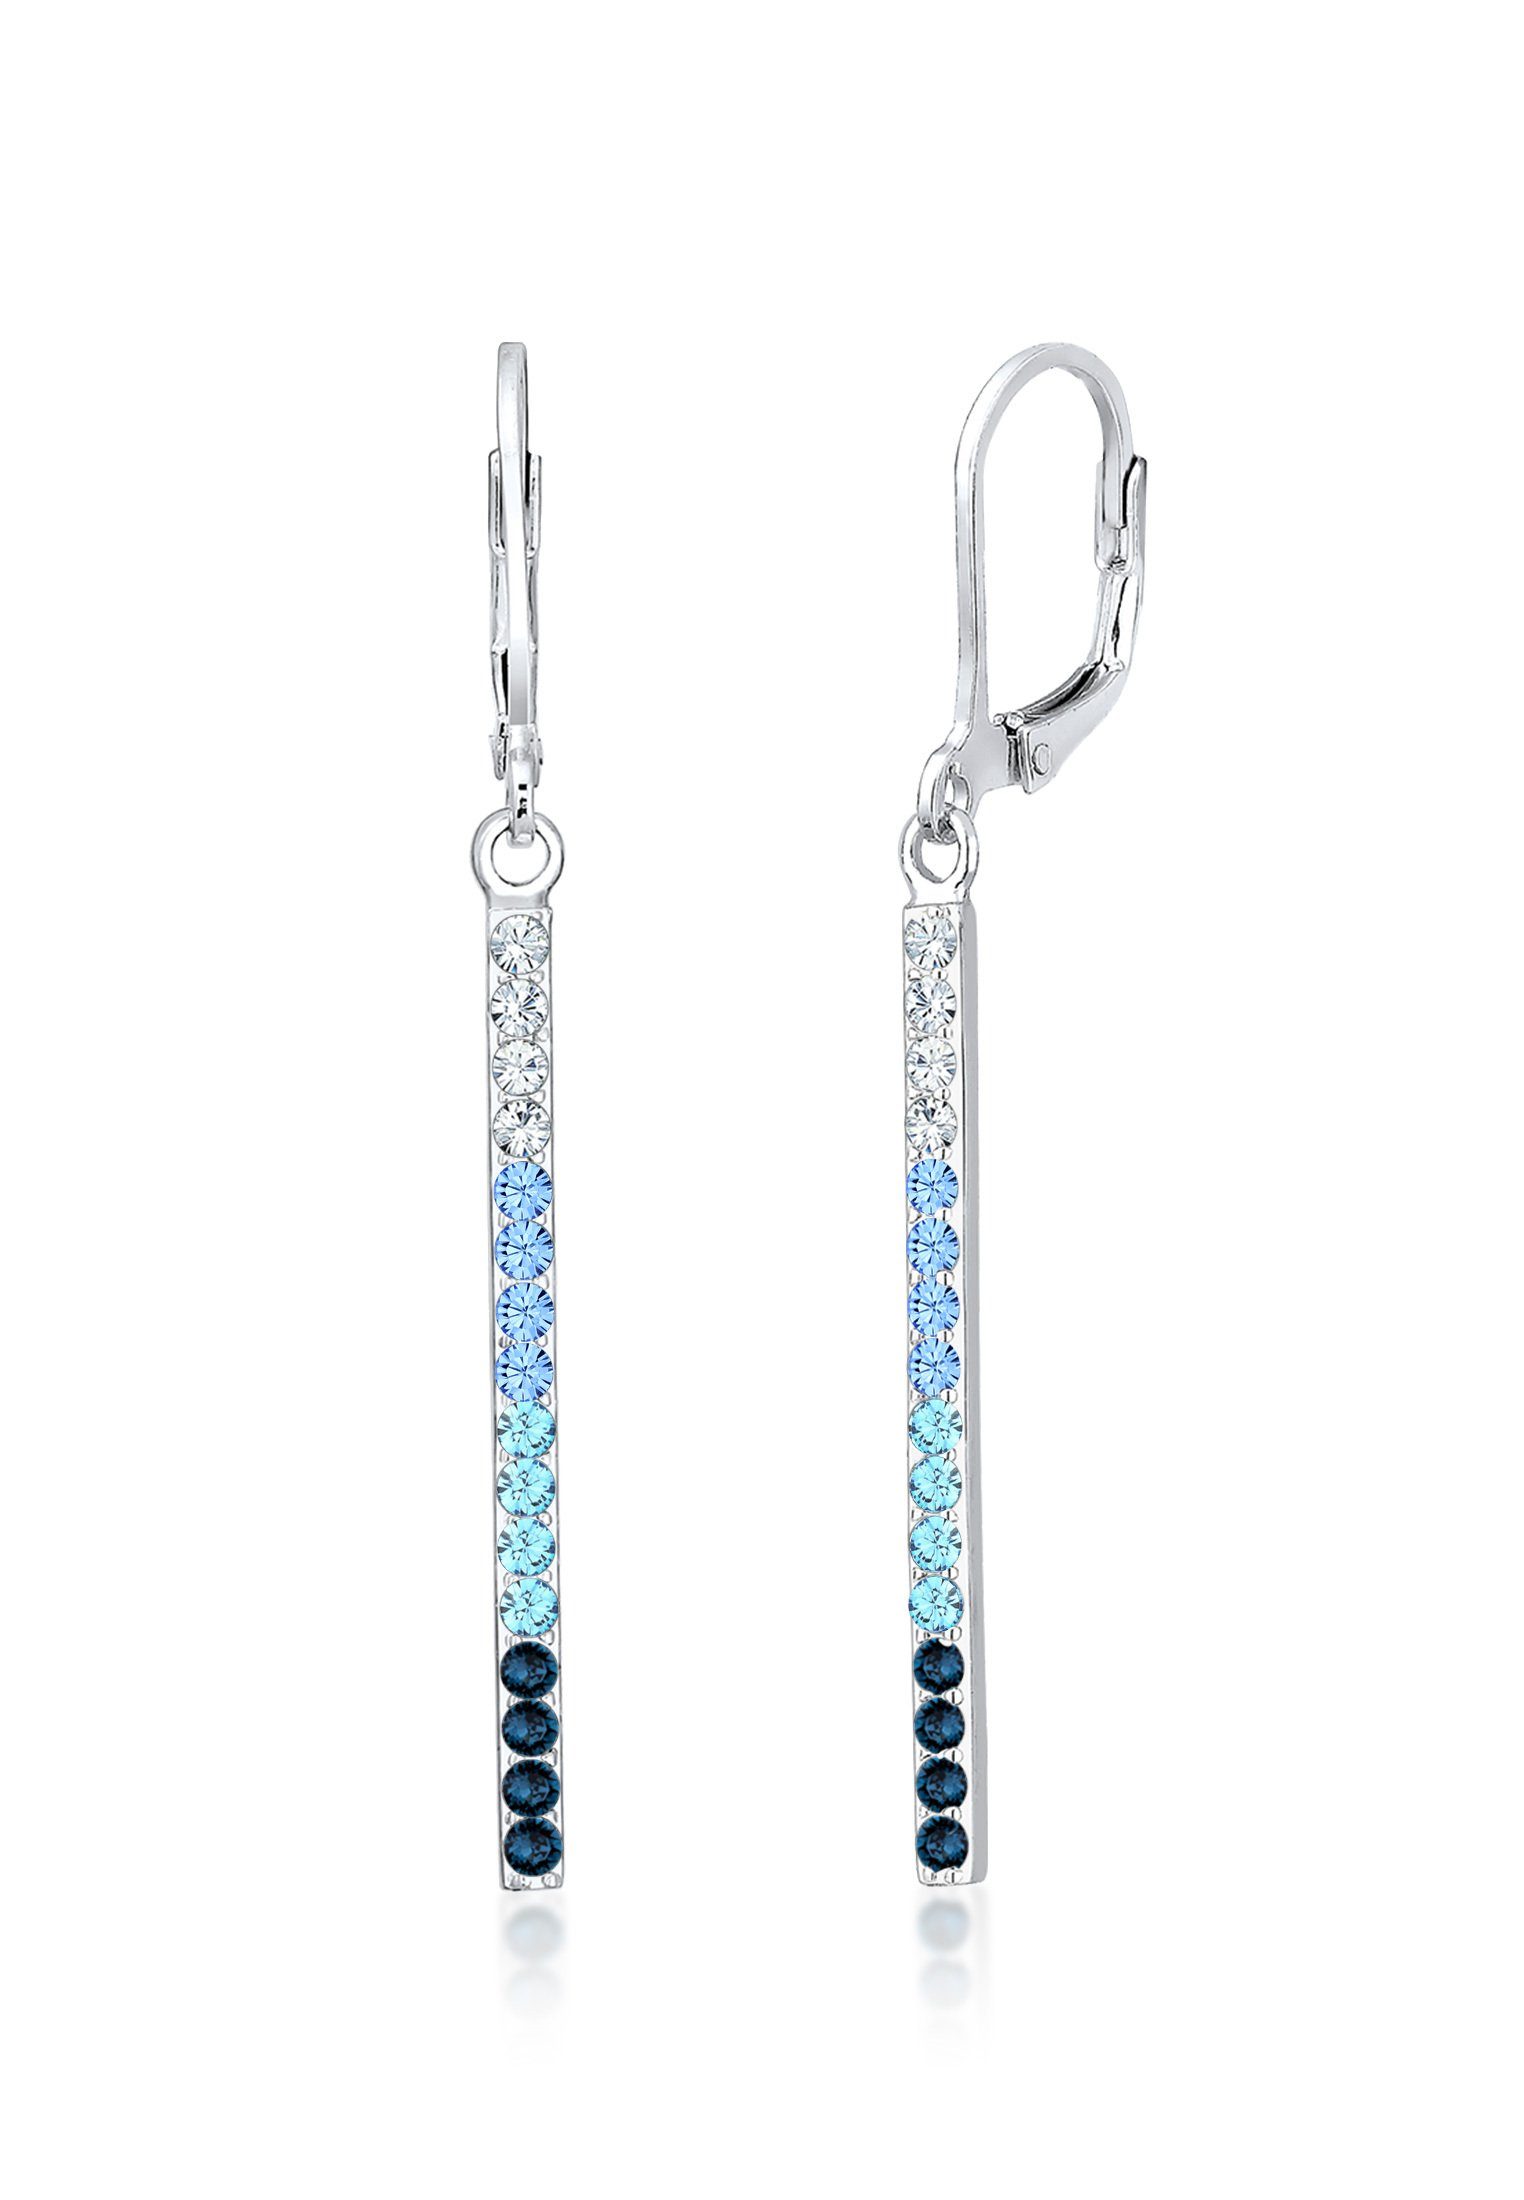 Ohrhänger Paar Silber Stab Kristalle mit Elli Blau 925 lang